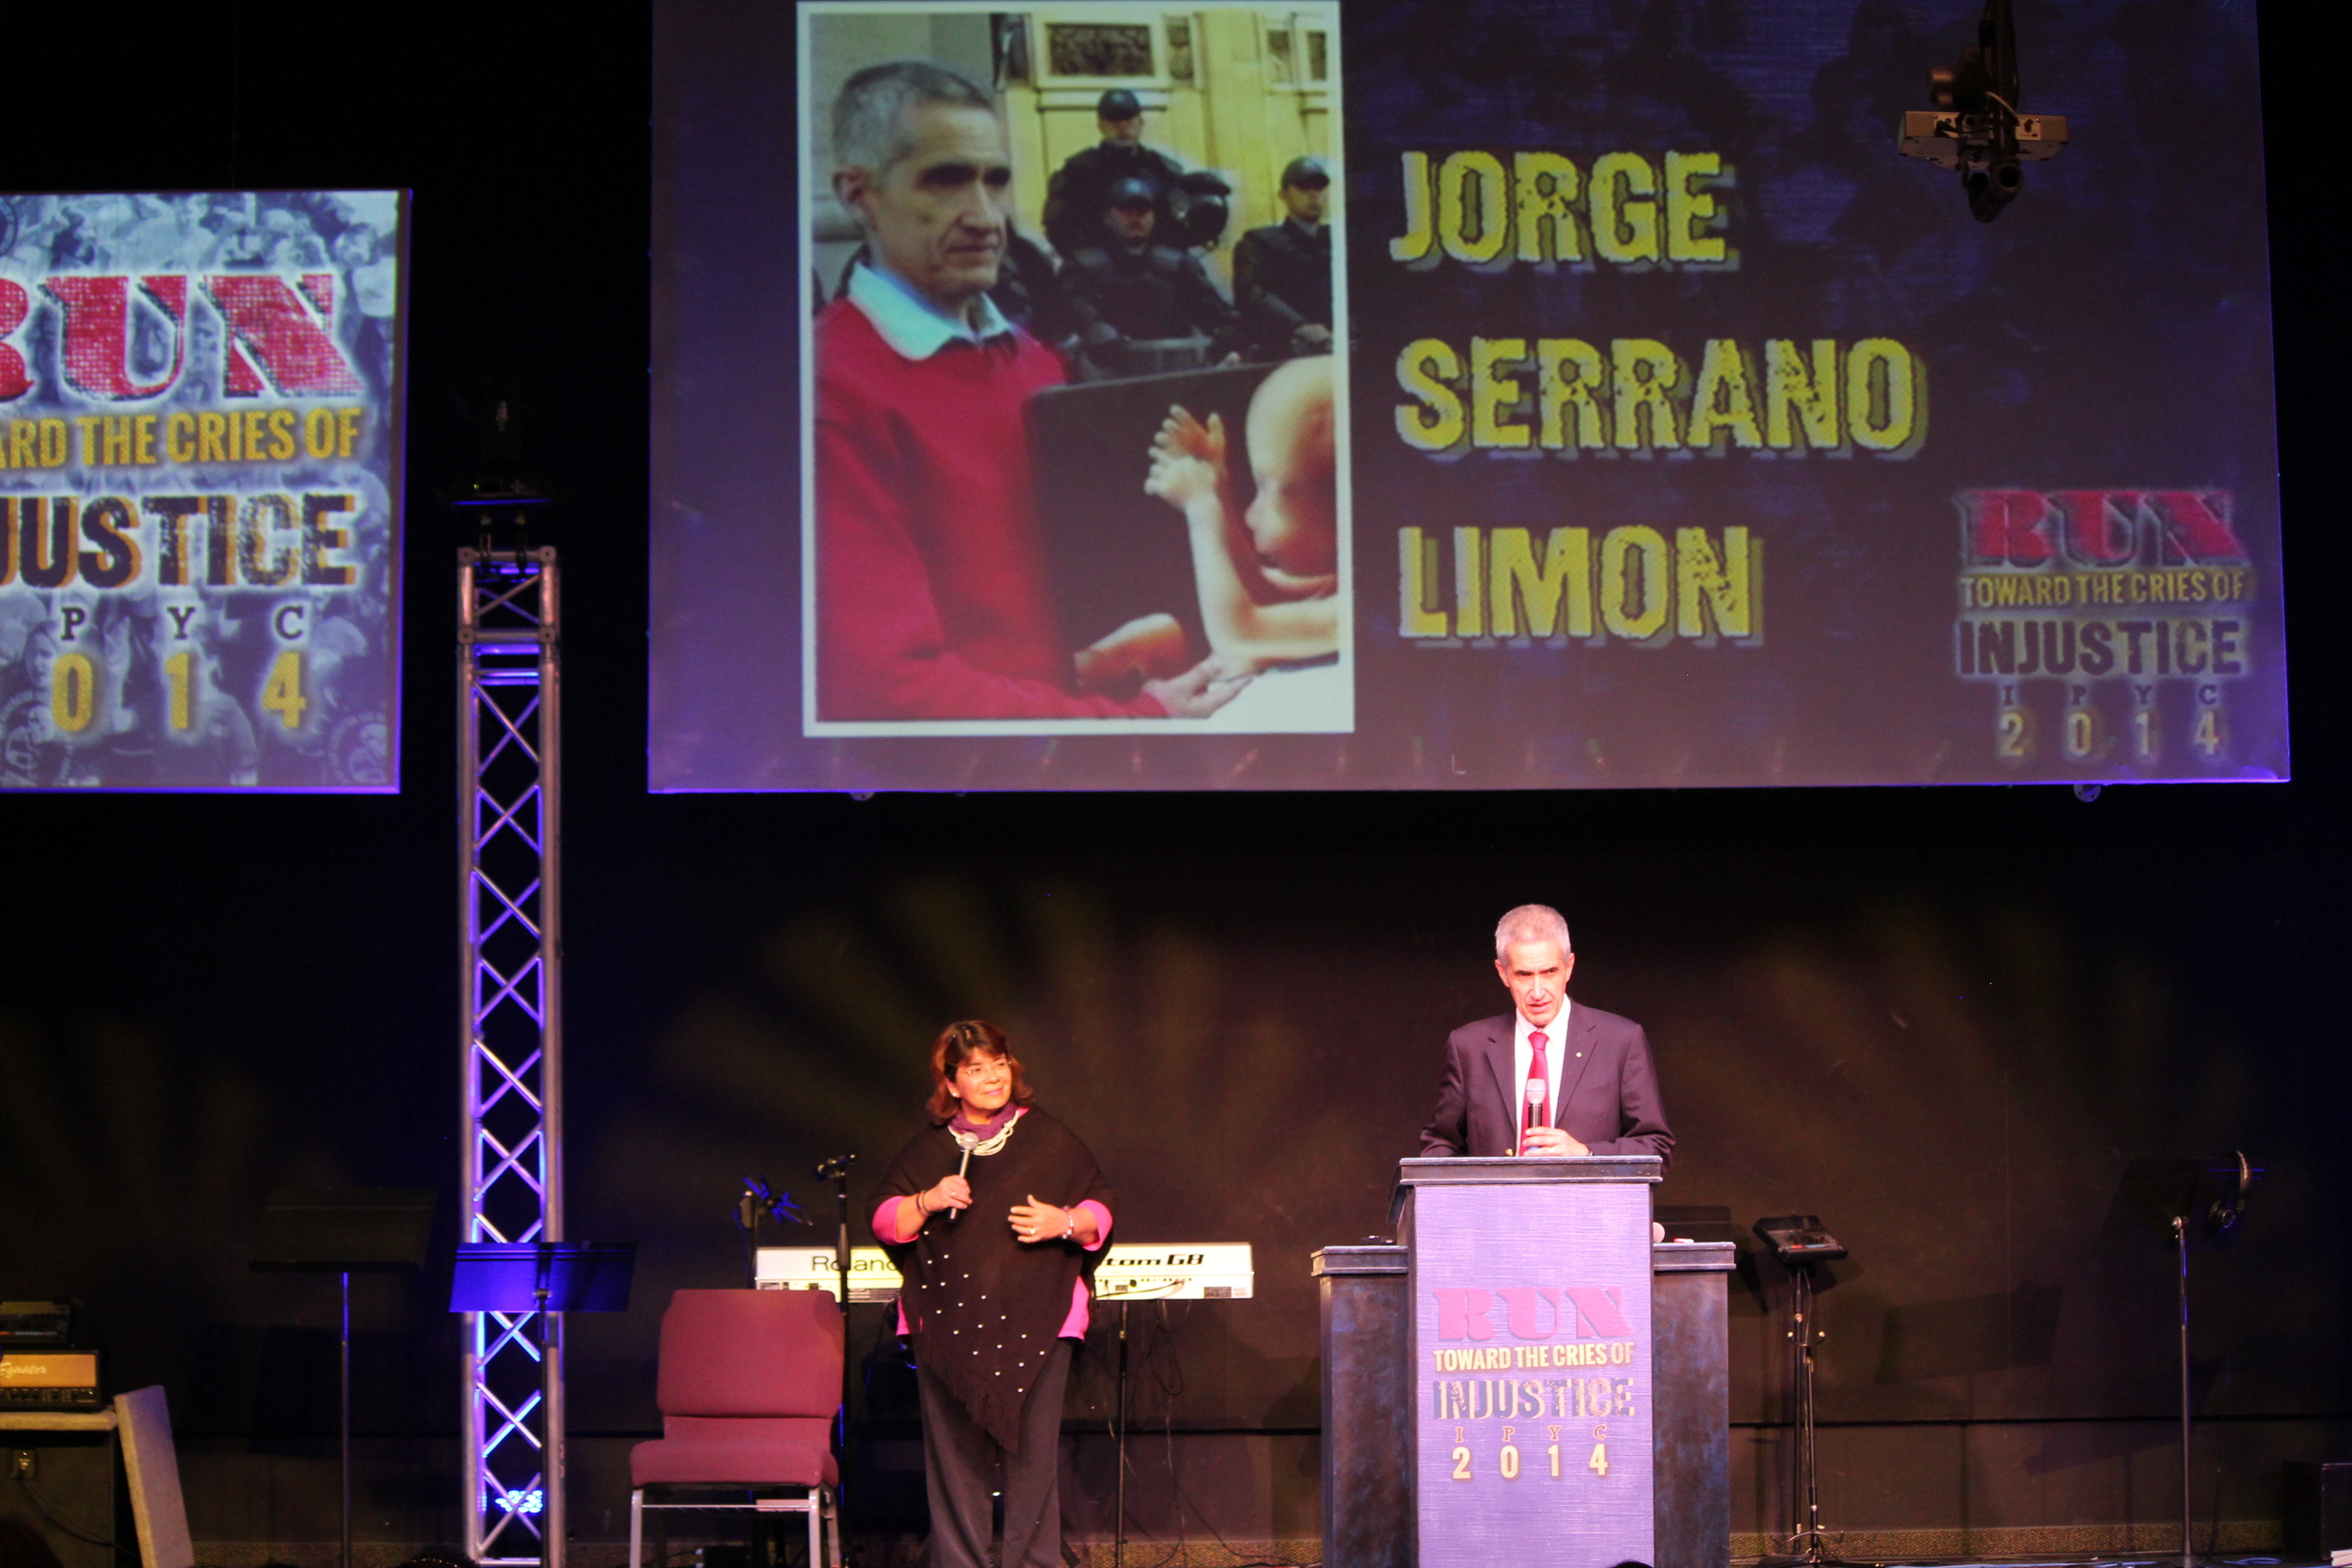 Jorge Serrano Limon, Centro de Ayuda para la Mujer